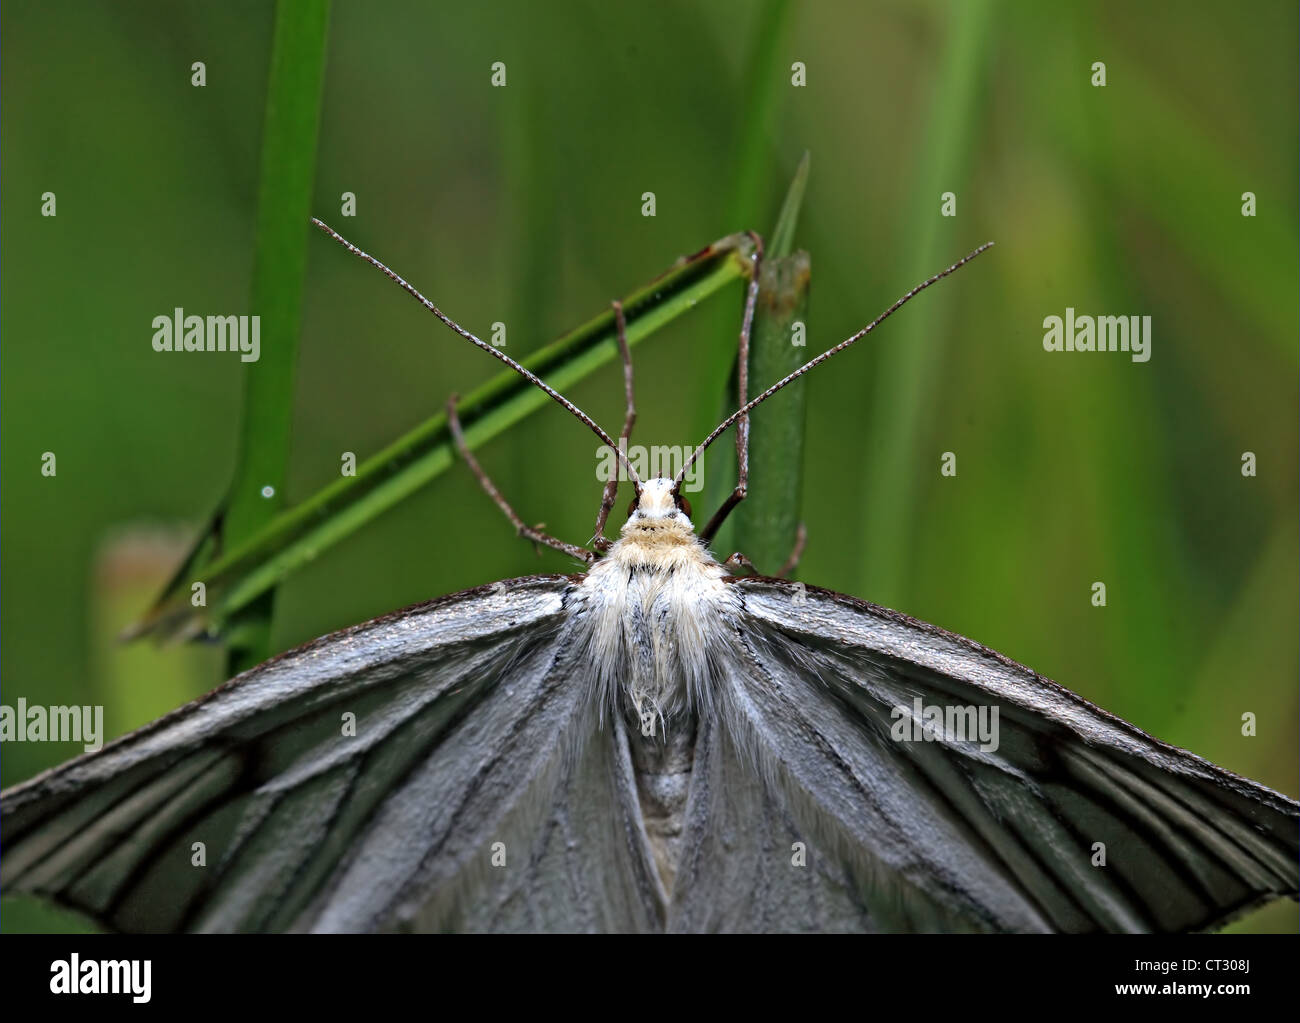 darkenning butterfly on green background Stock Photo